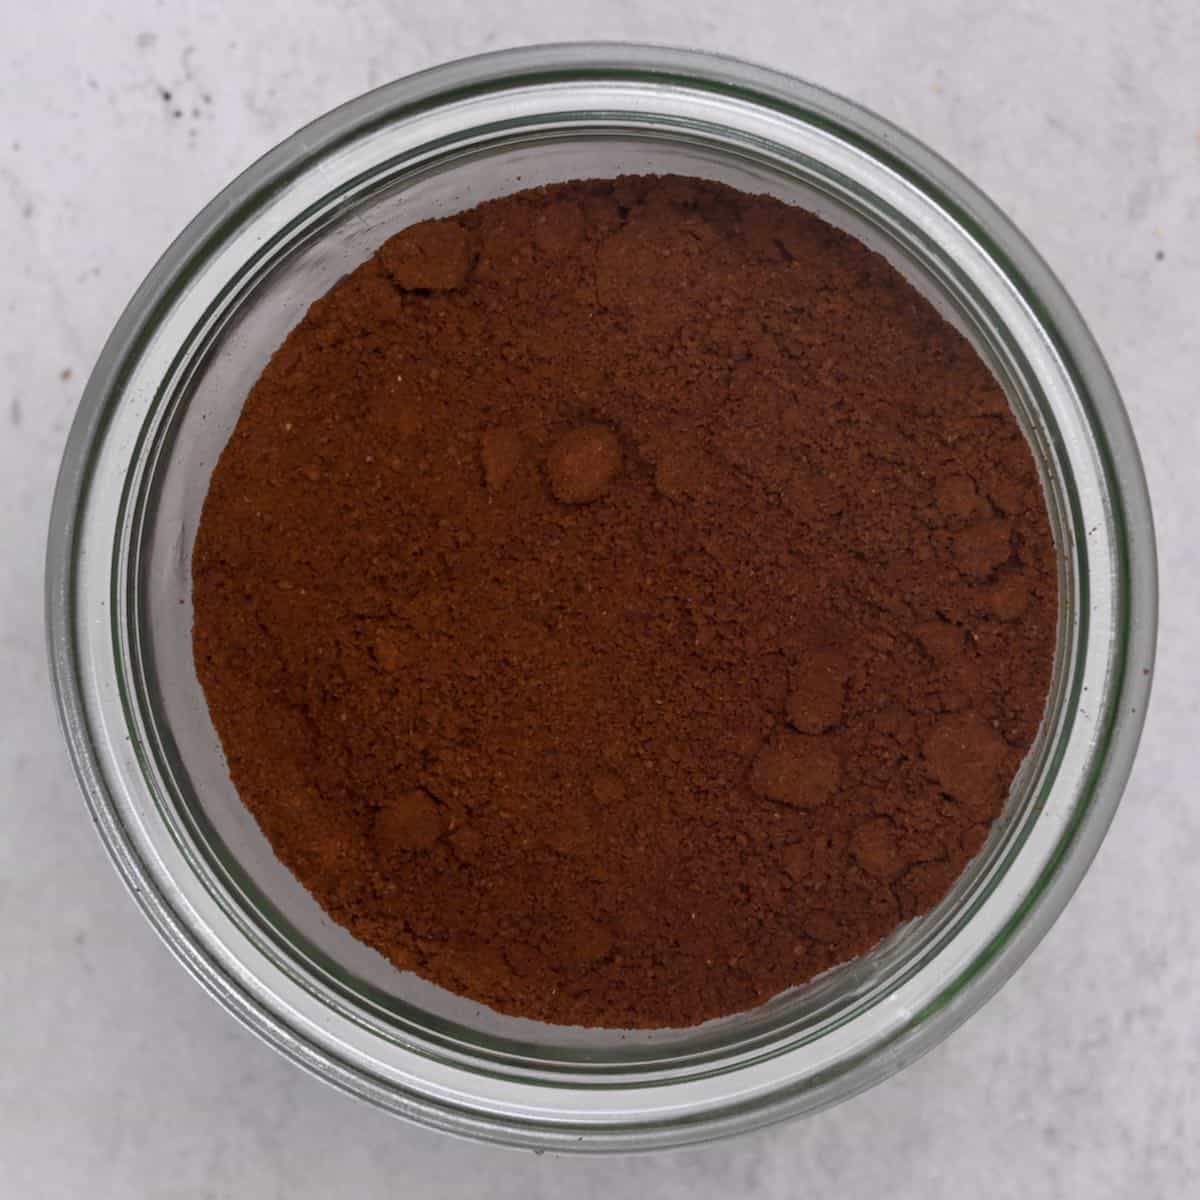 top view of esperesso powder in a glass jar